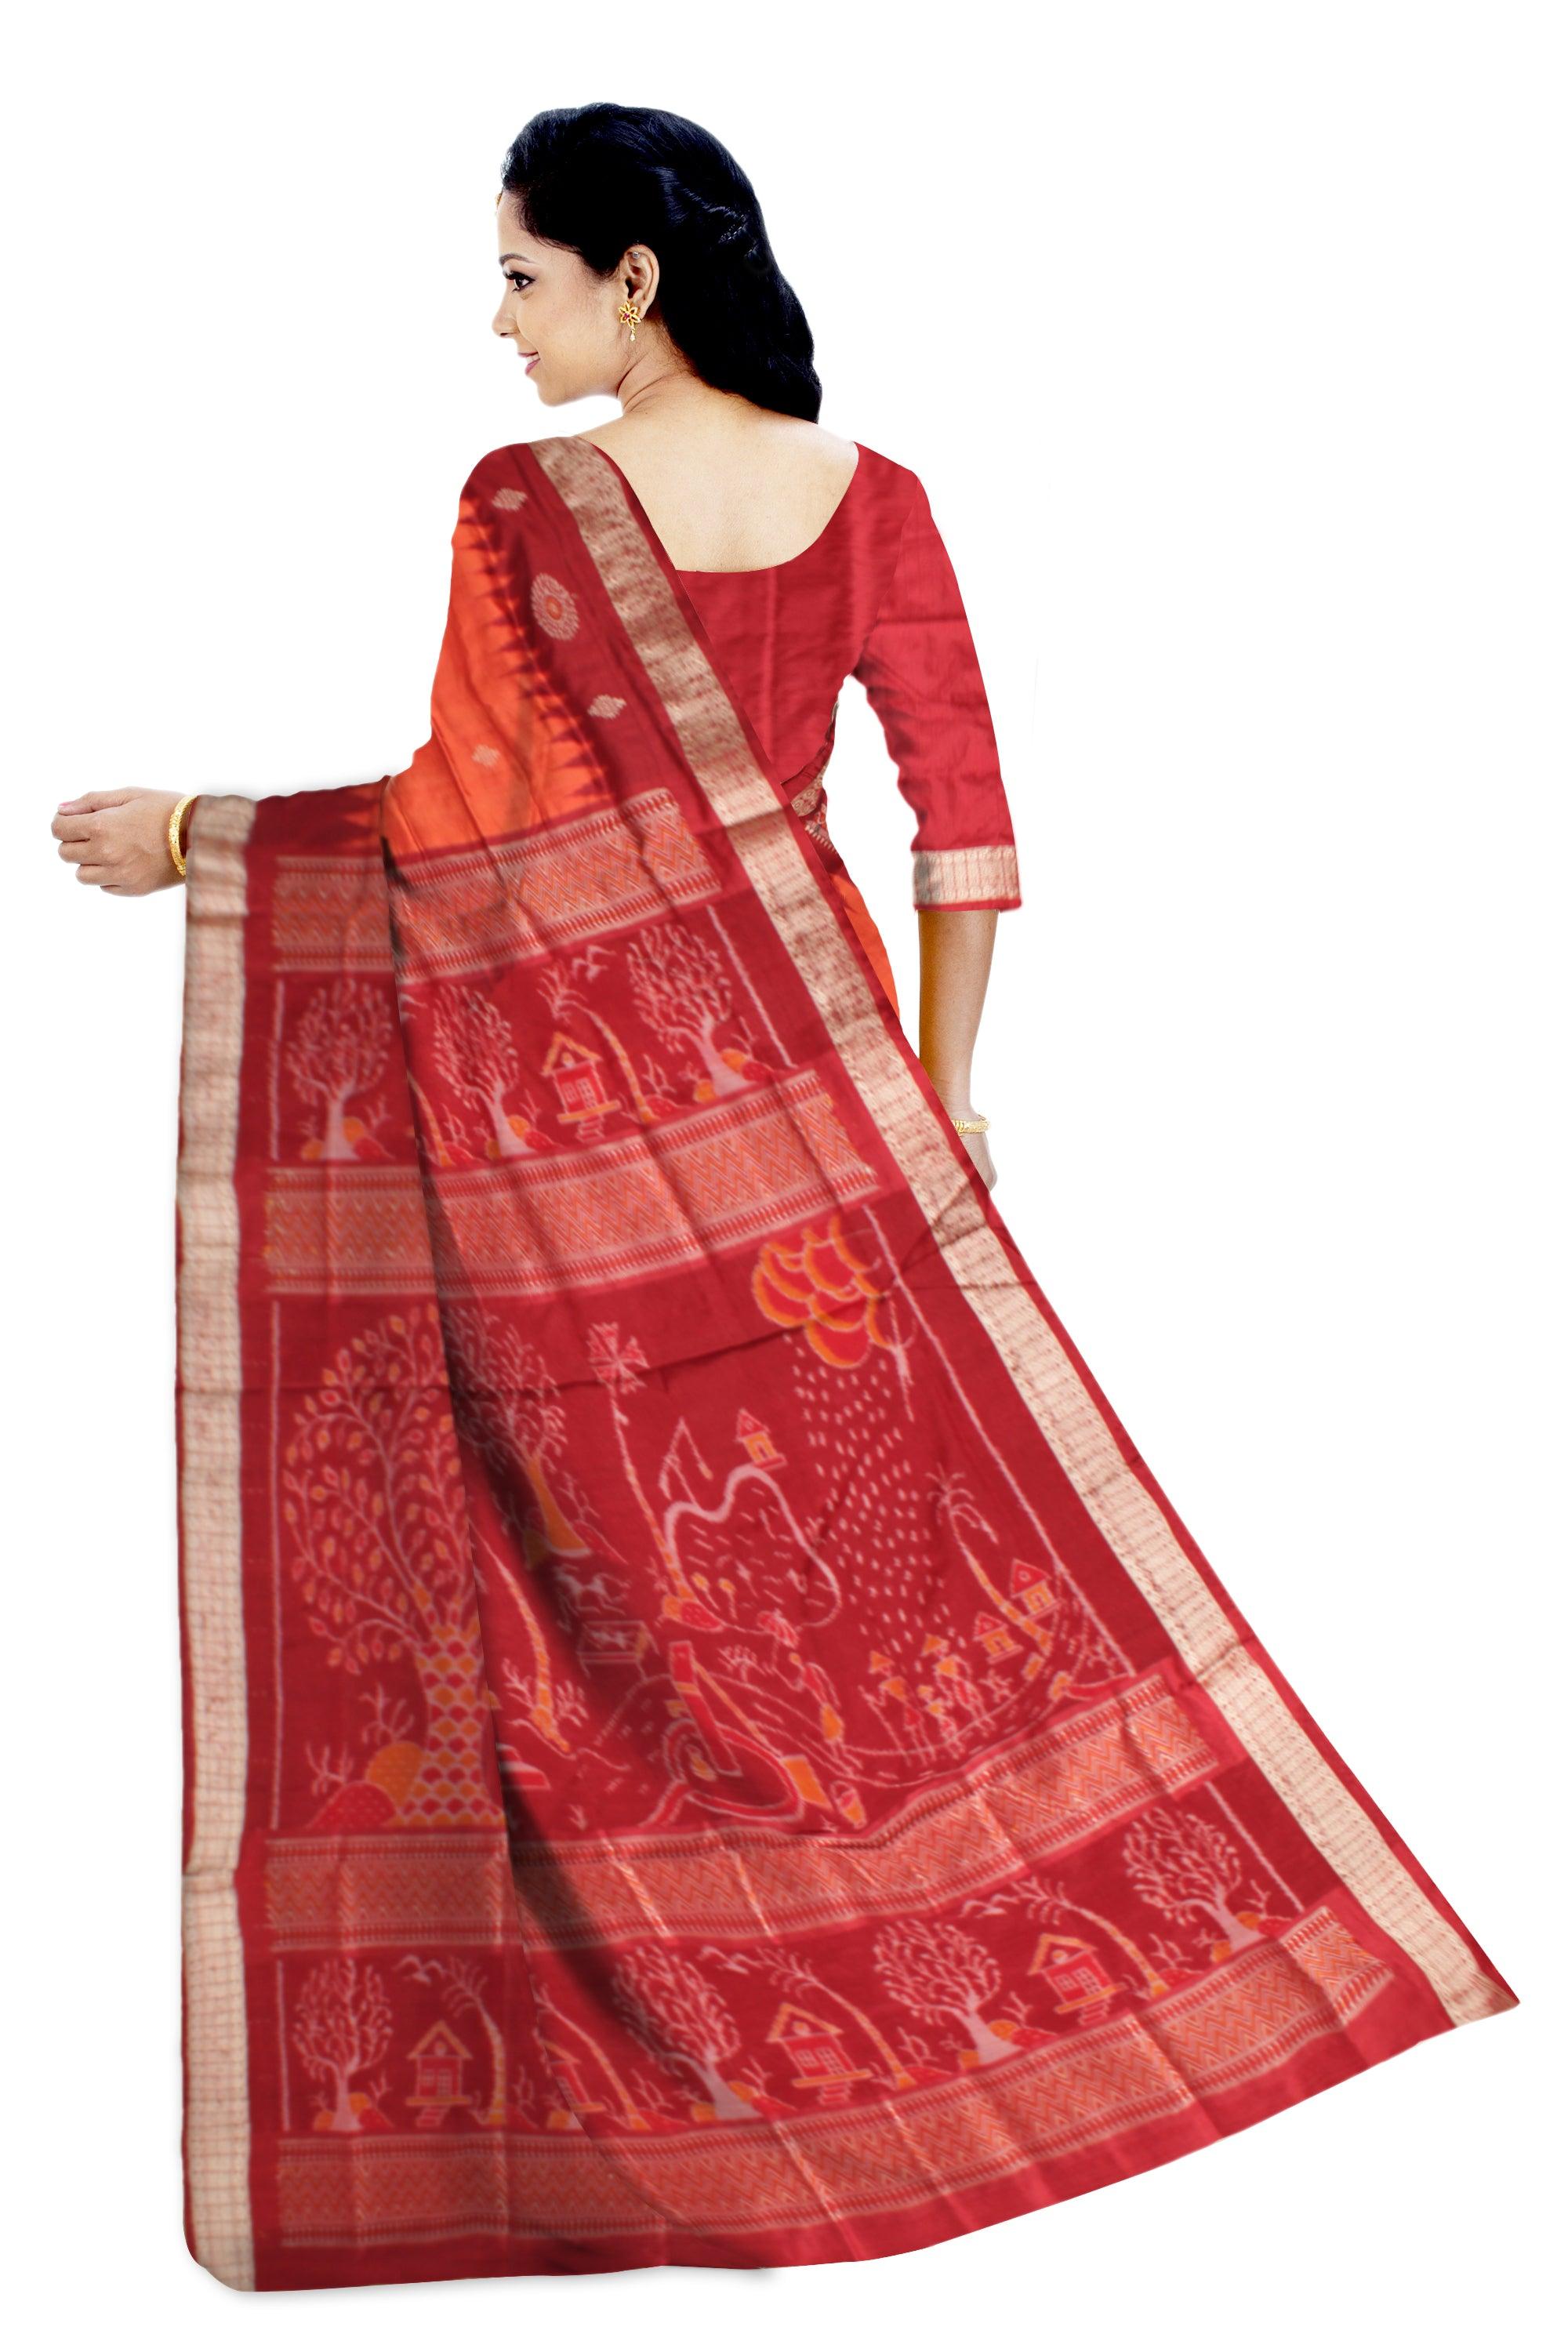 Sambalpuri Pata Saree in Orange  and Maroon color  Mayurika  design in Body with blouse piece. - Koshali Arts & Crafts Enterprise